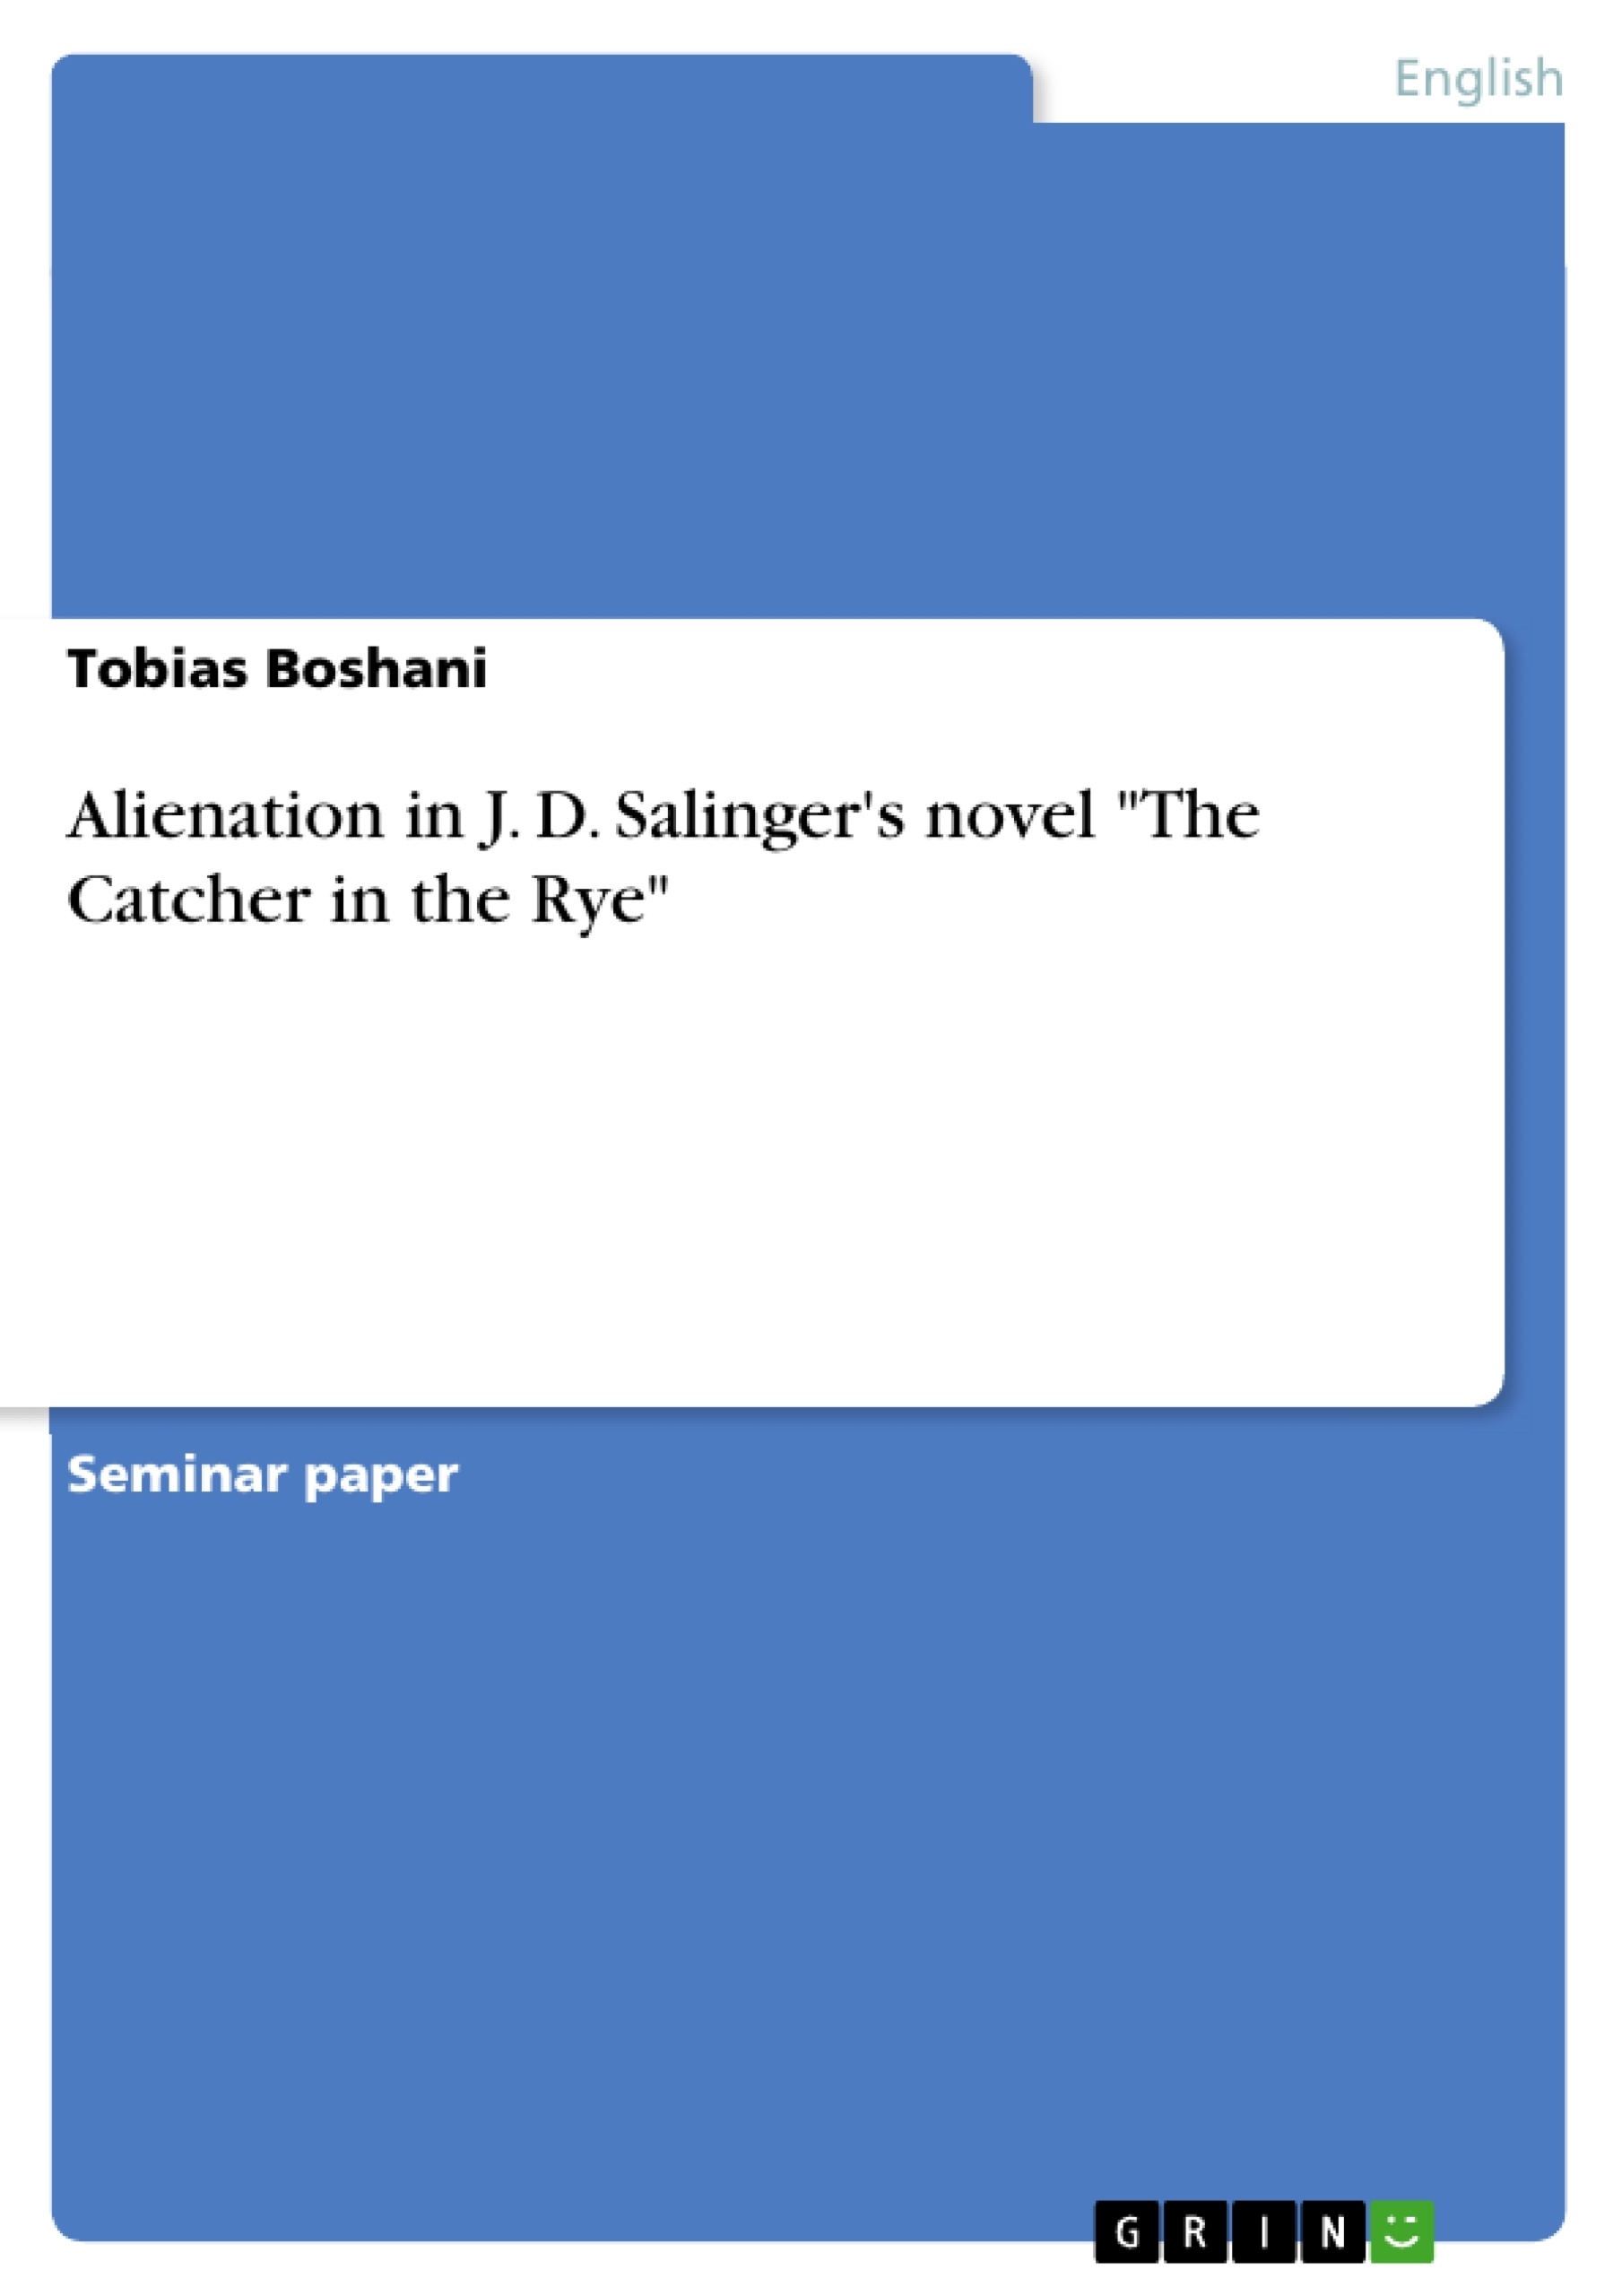 Título: Alienation in J. D. Salinger's novel "The Catcher in the Rye"